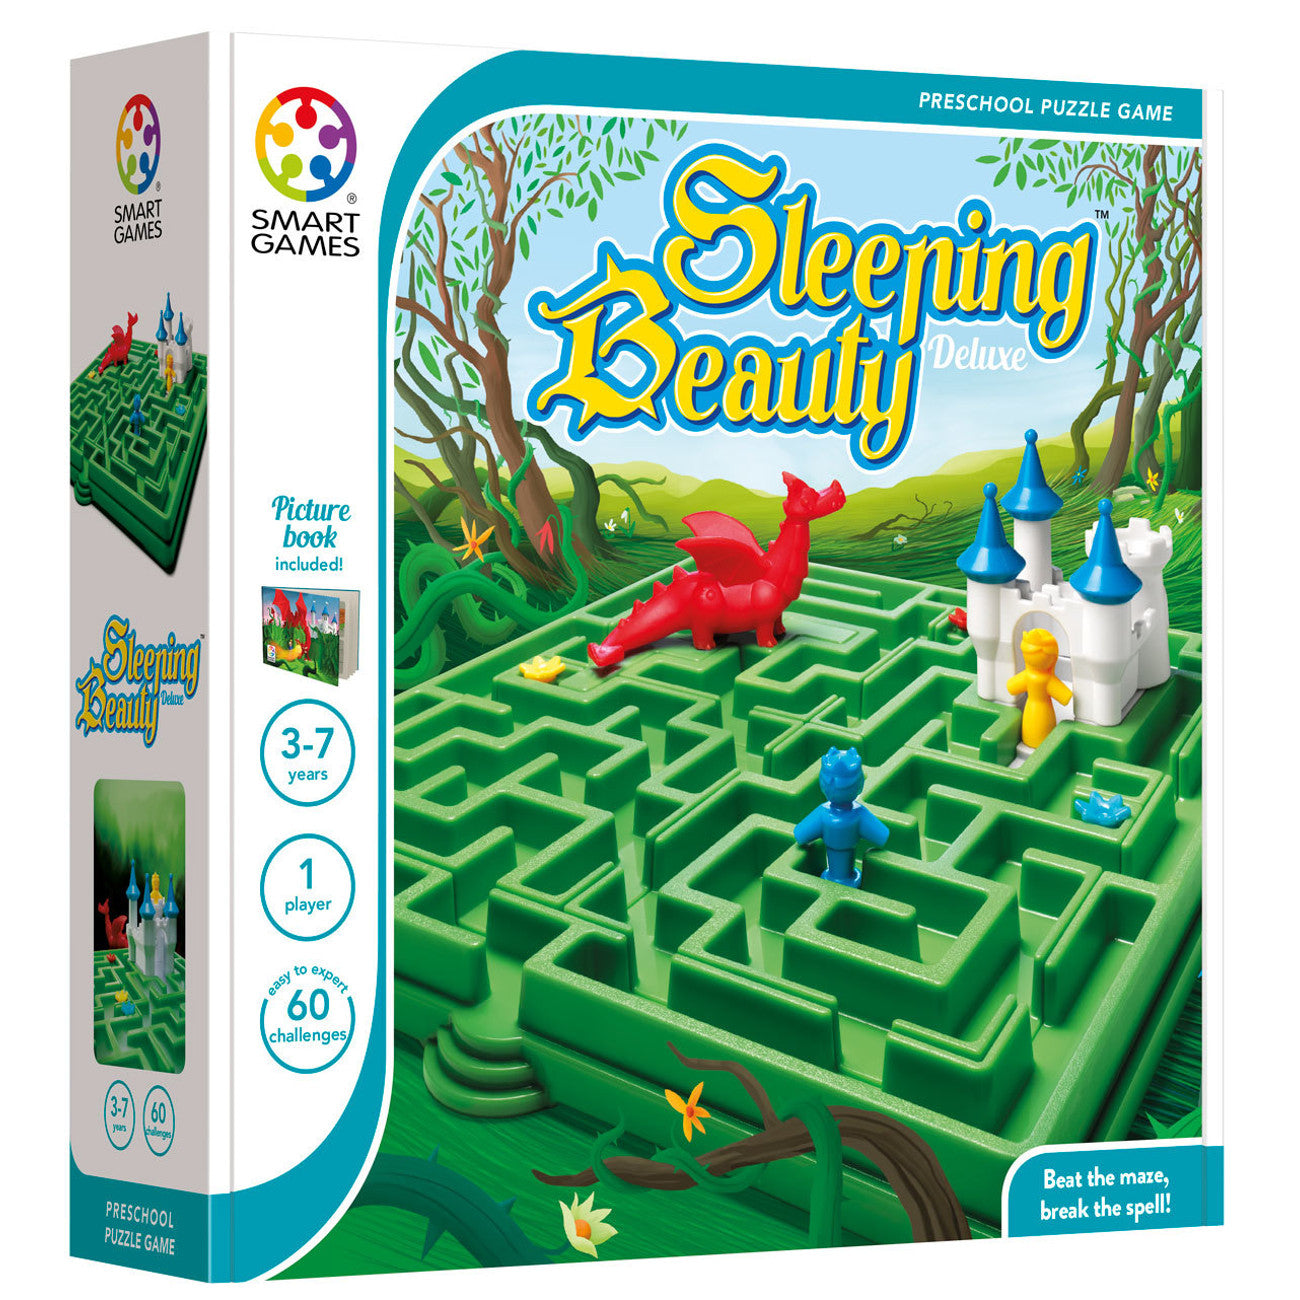 Smart Games Sleeping Beauty Game